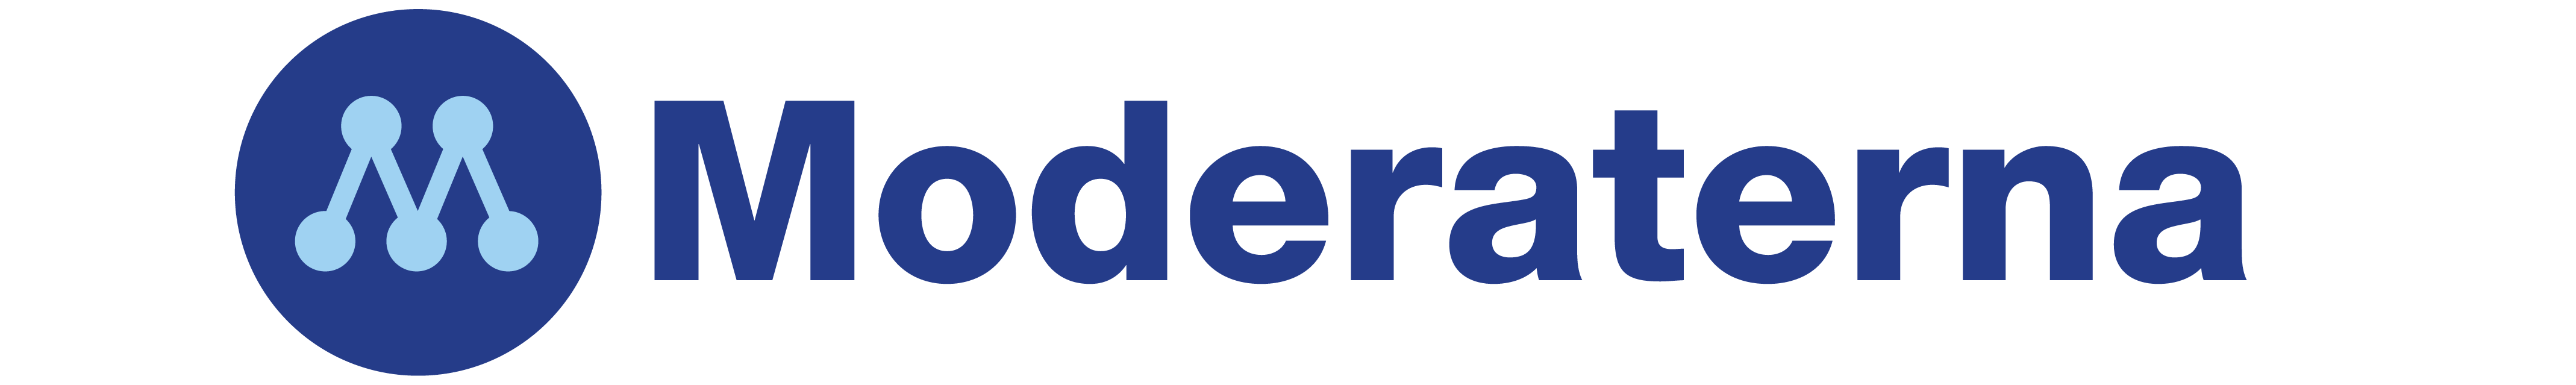 Moderaterna - Partisymbol